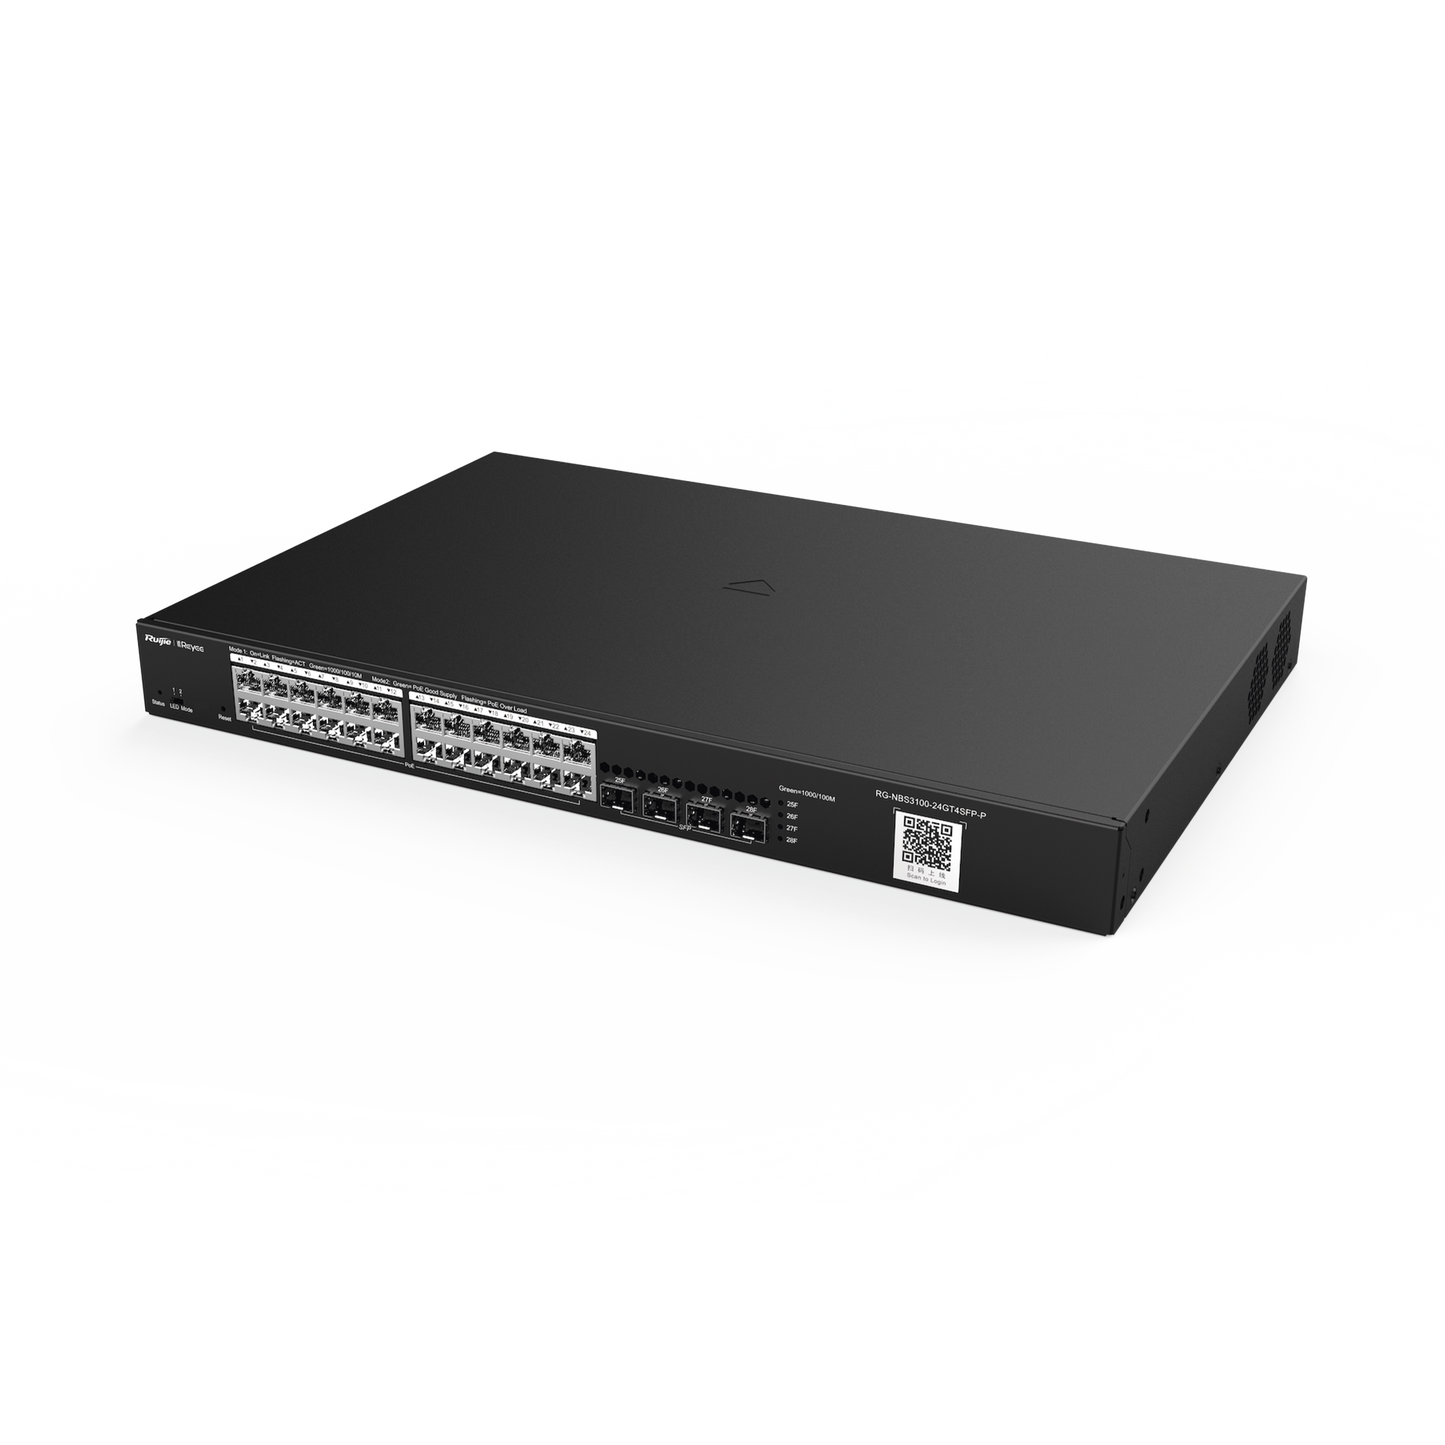 RG-NBS3100-24GT4SFP-P, 28-Port Gigabit Layer 2 Cloud Managed PoE Switch